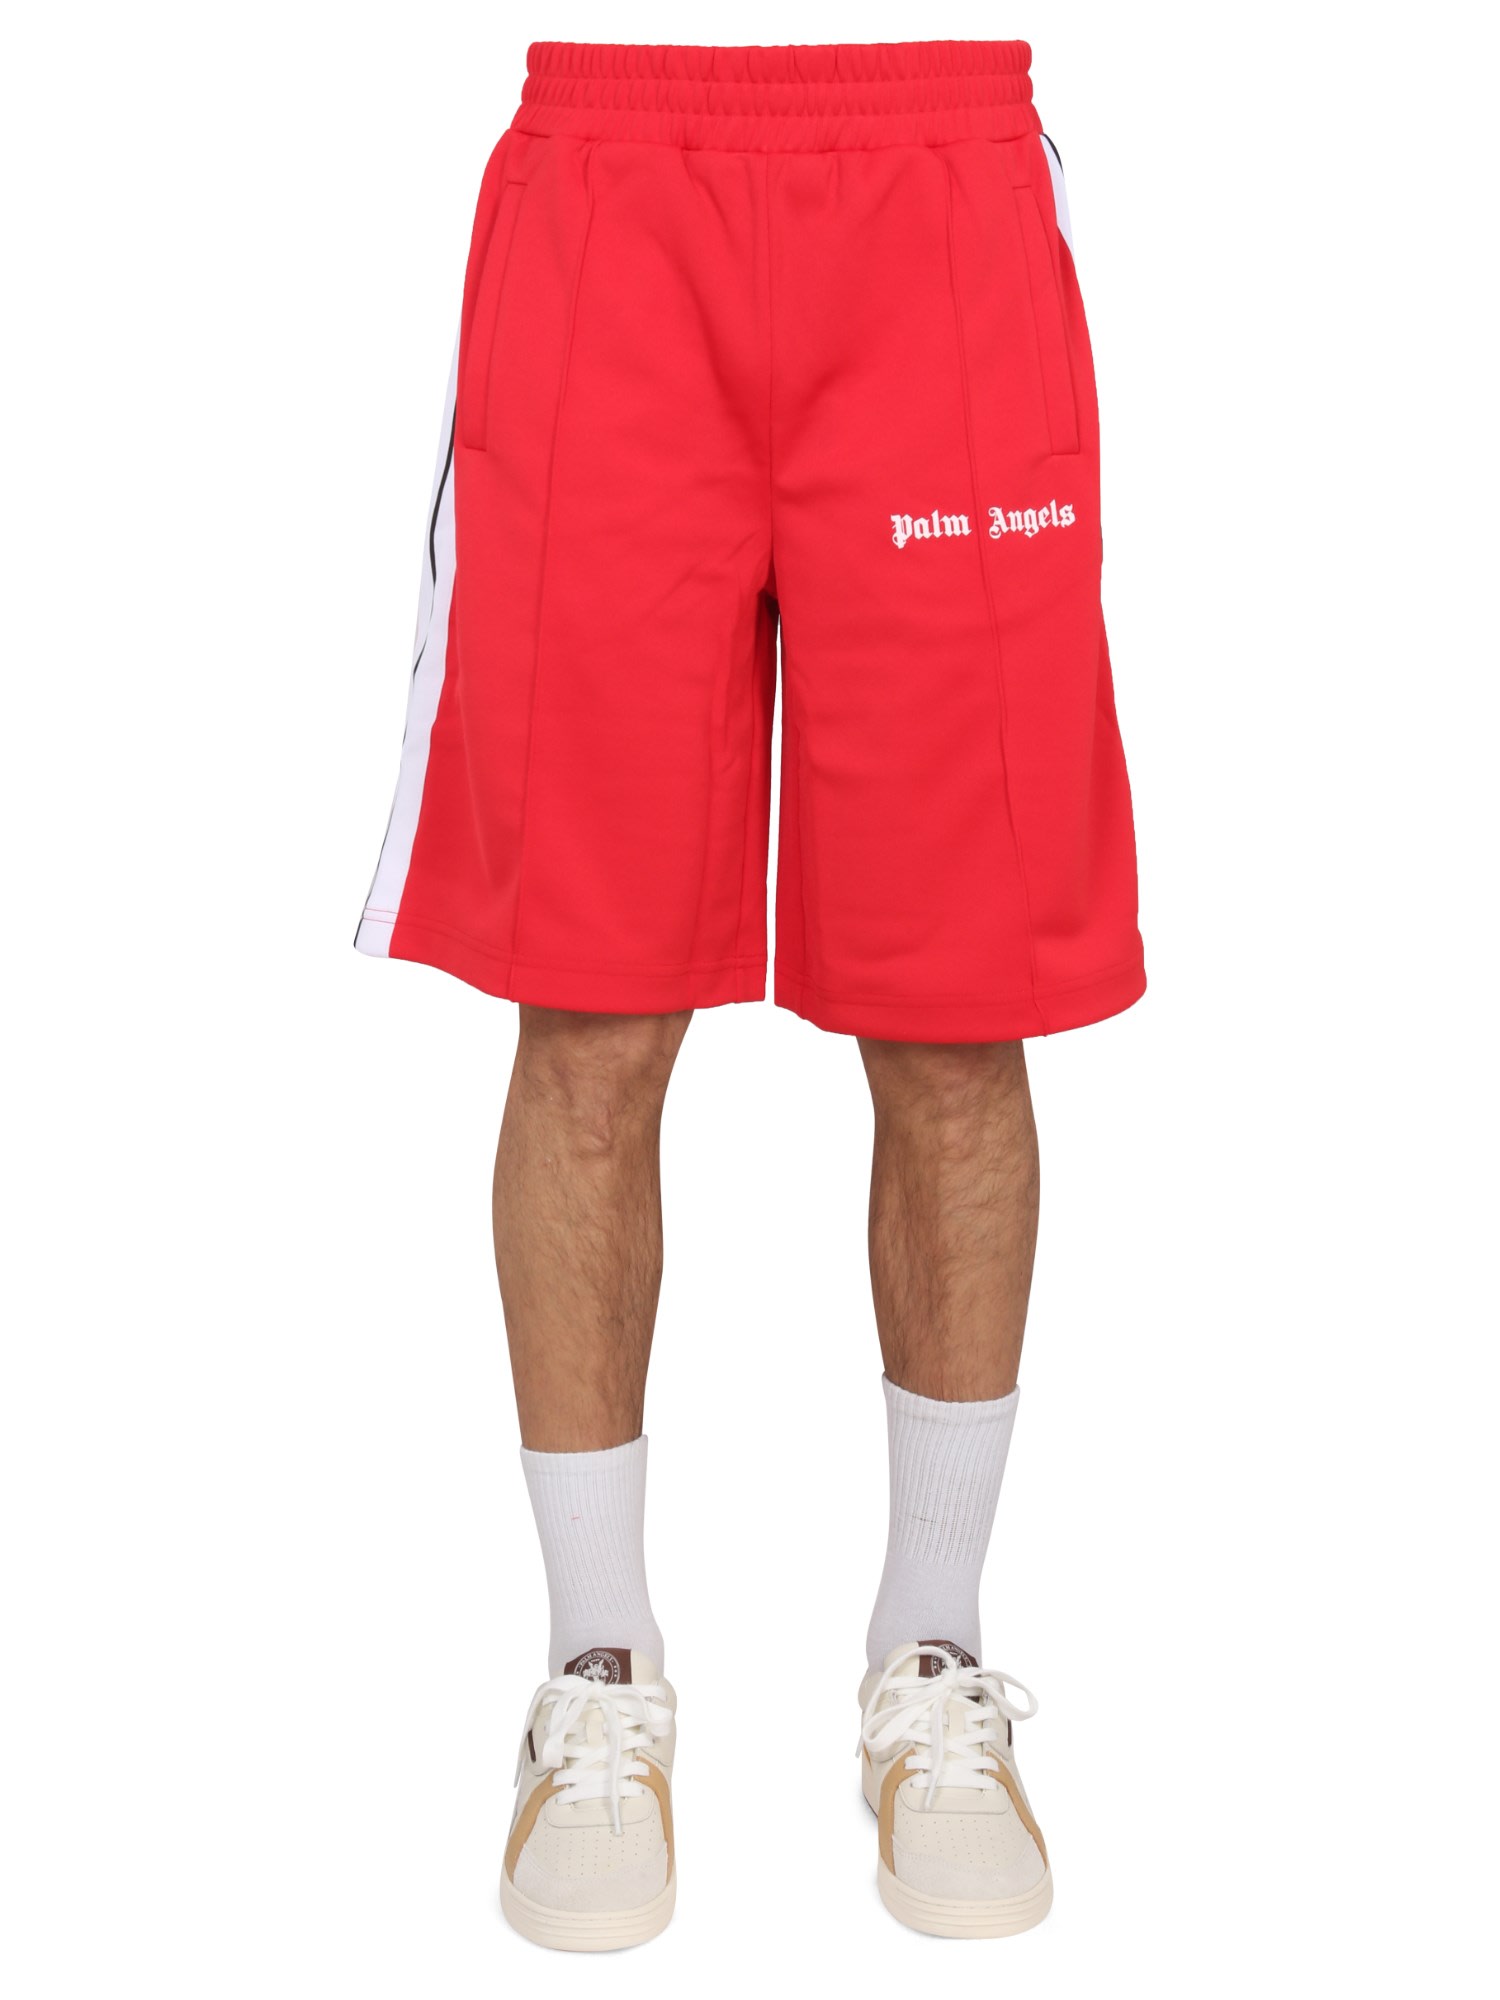 Palm Angels Sports Shorts